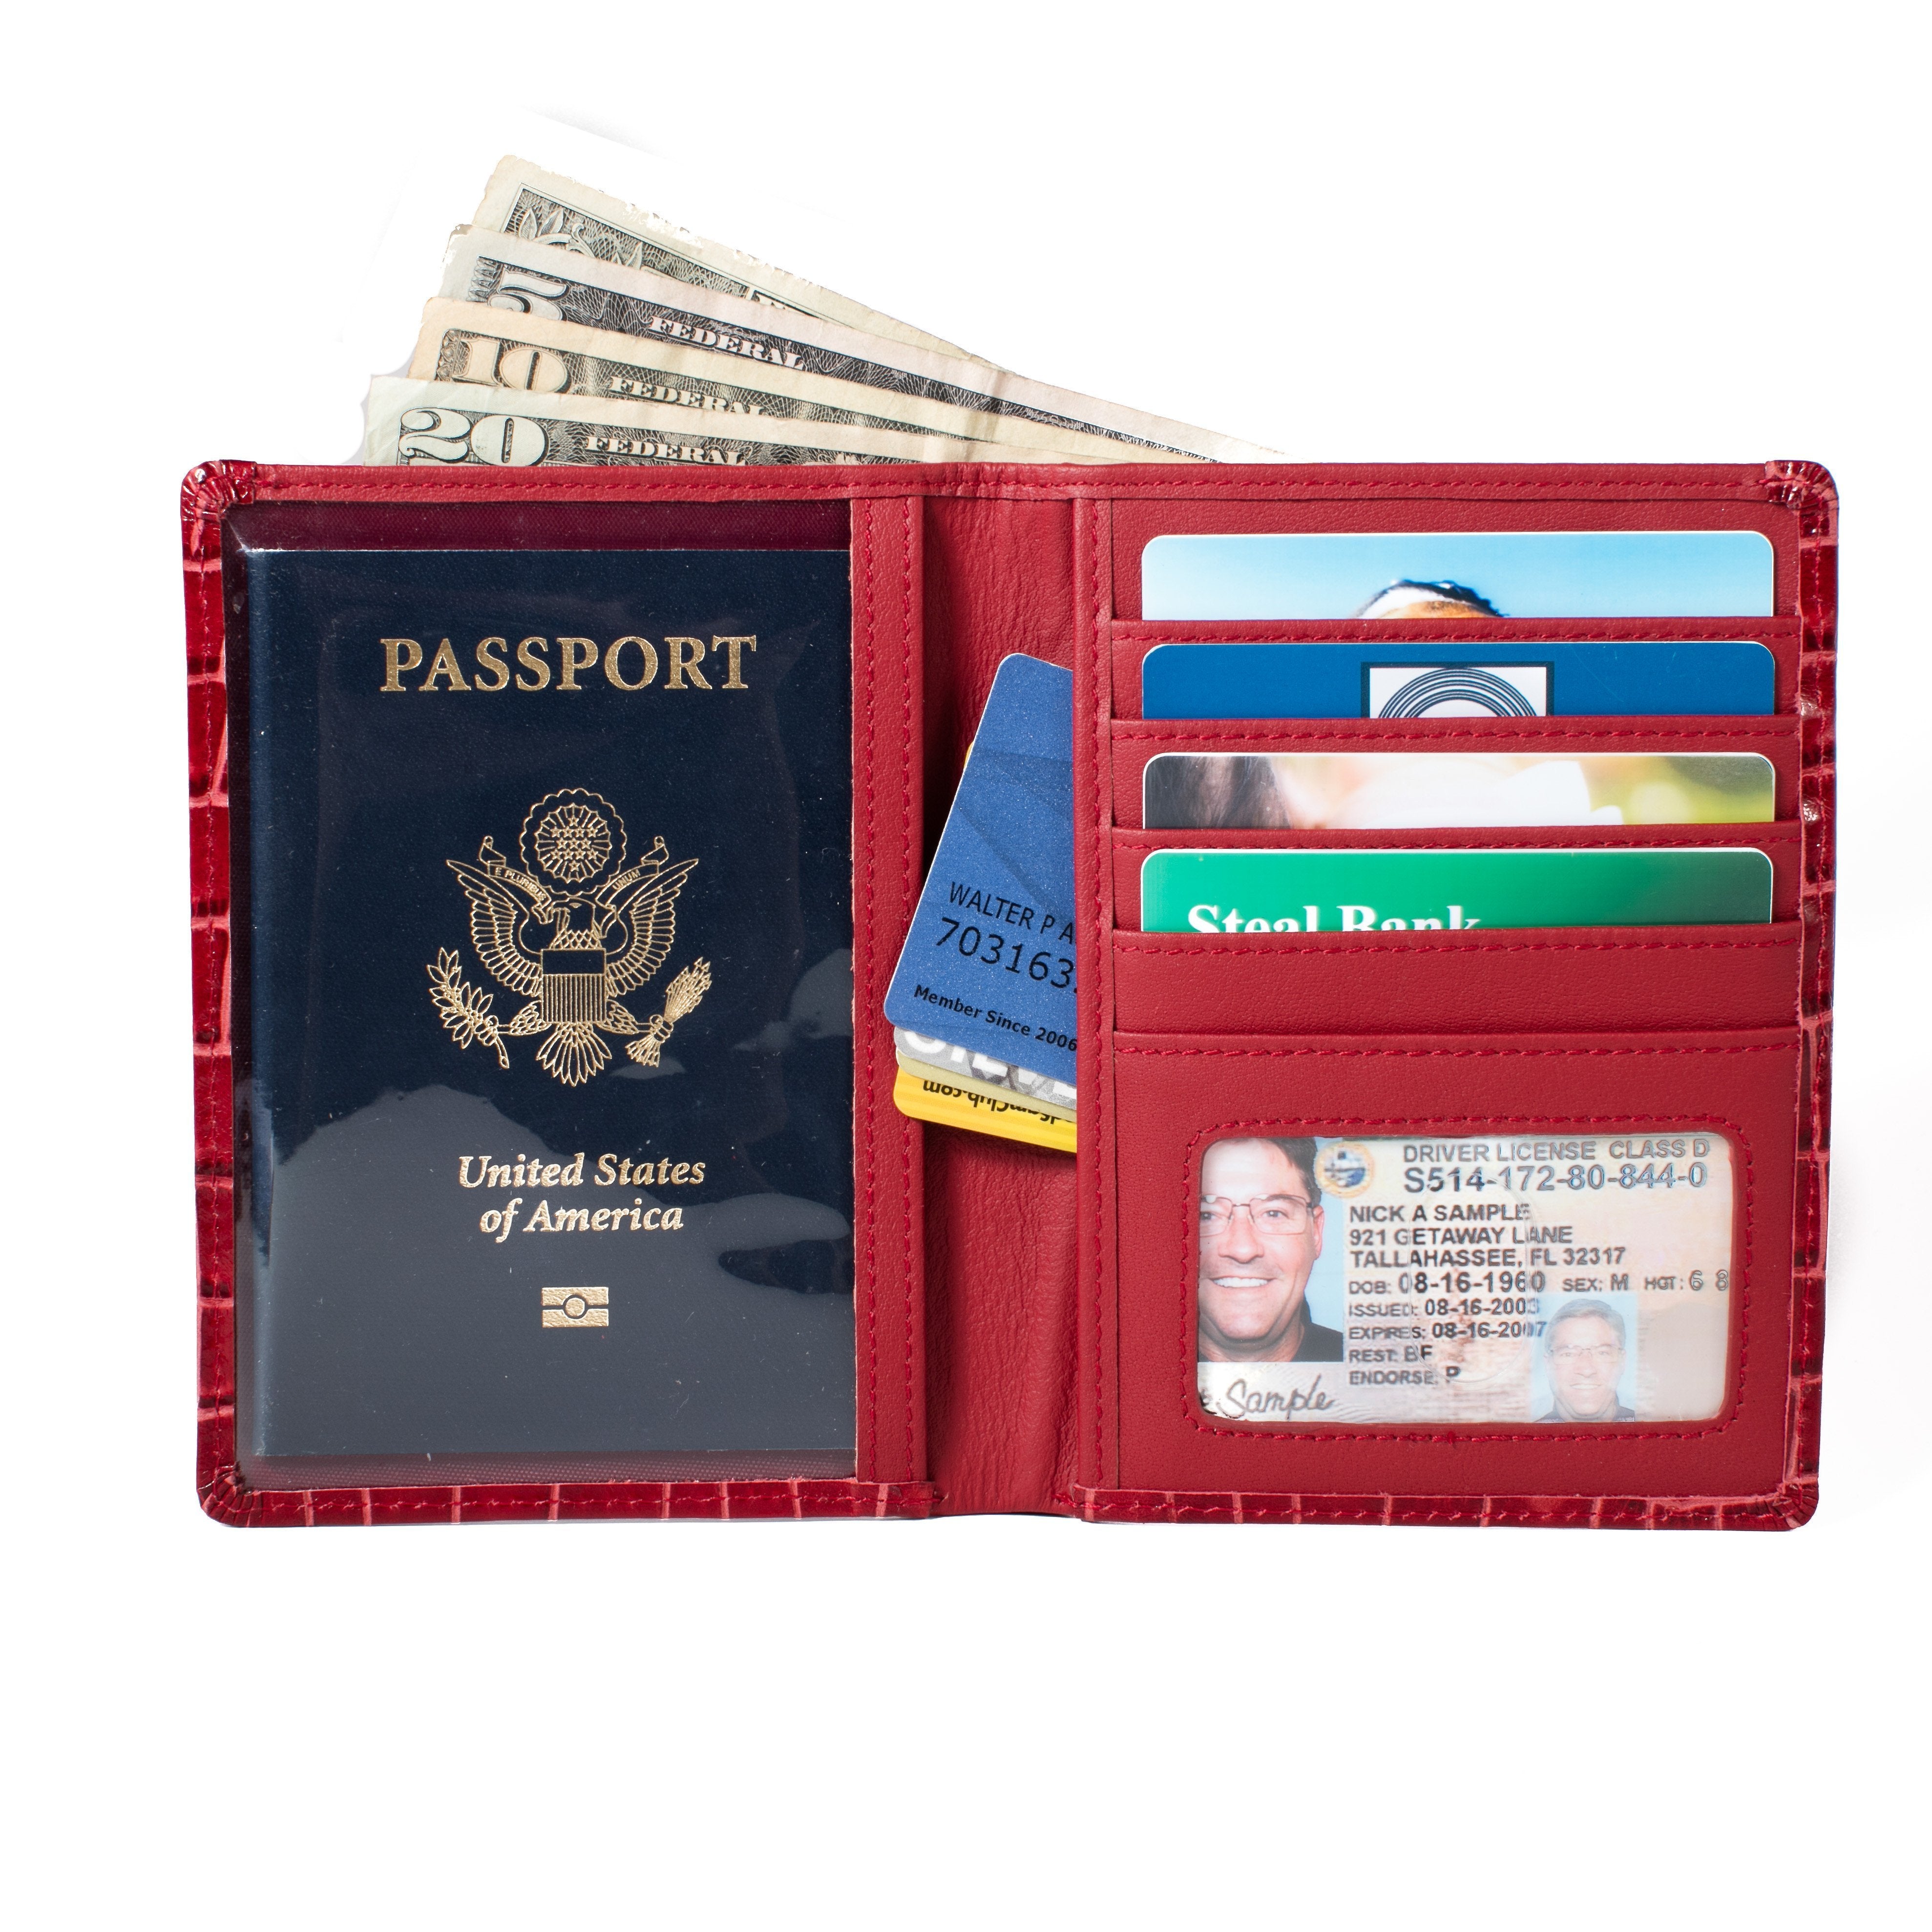 ID Stronghold Passport RFID Blocking Passport Wallet Designer